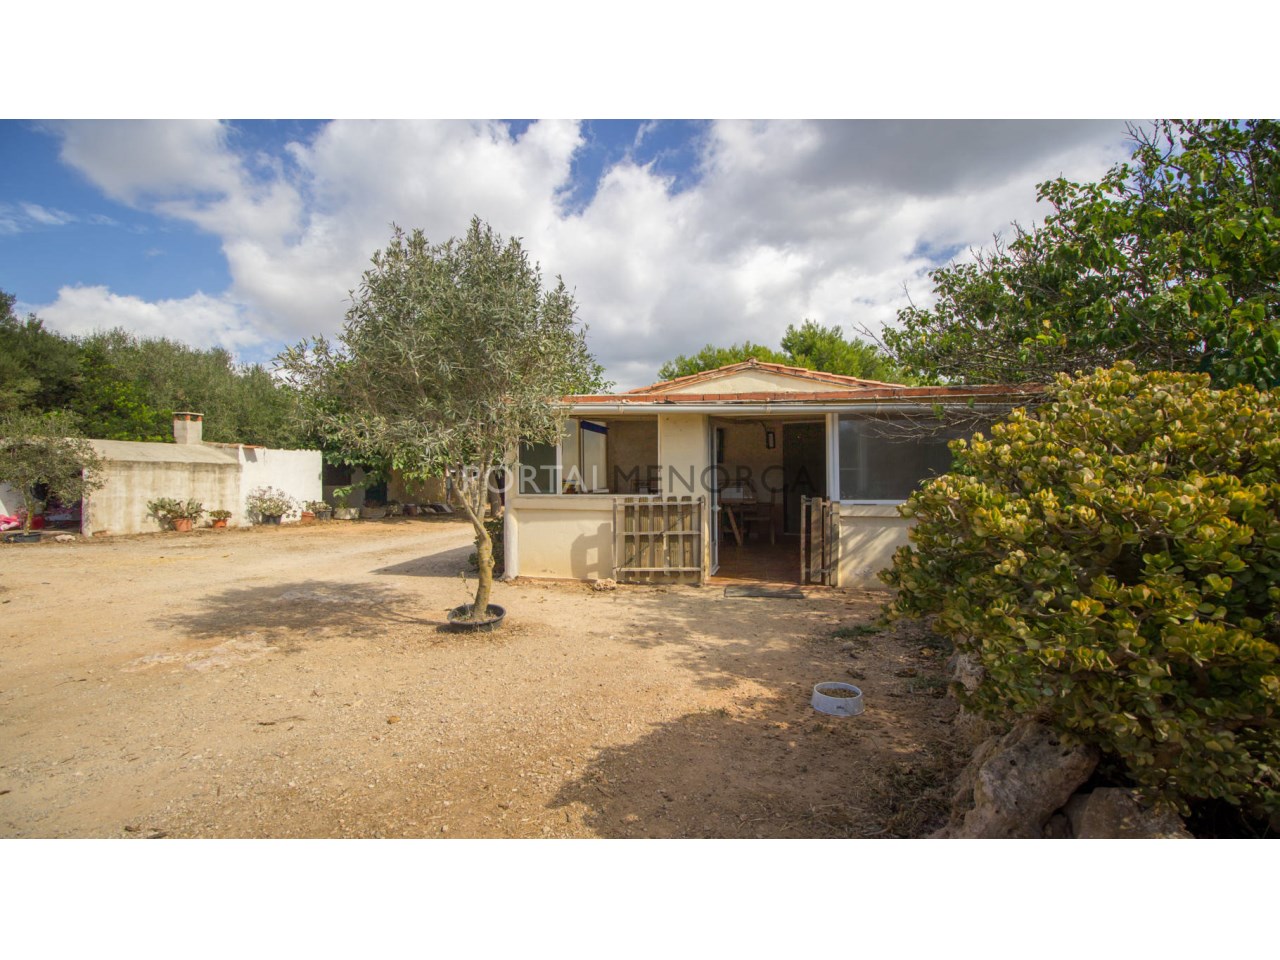 Dos casas de campo en venta en Menorca con piscina